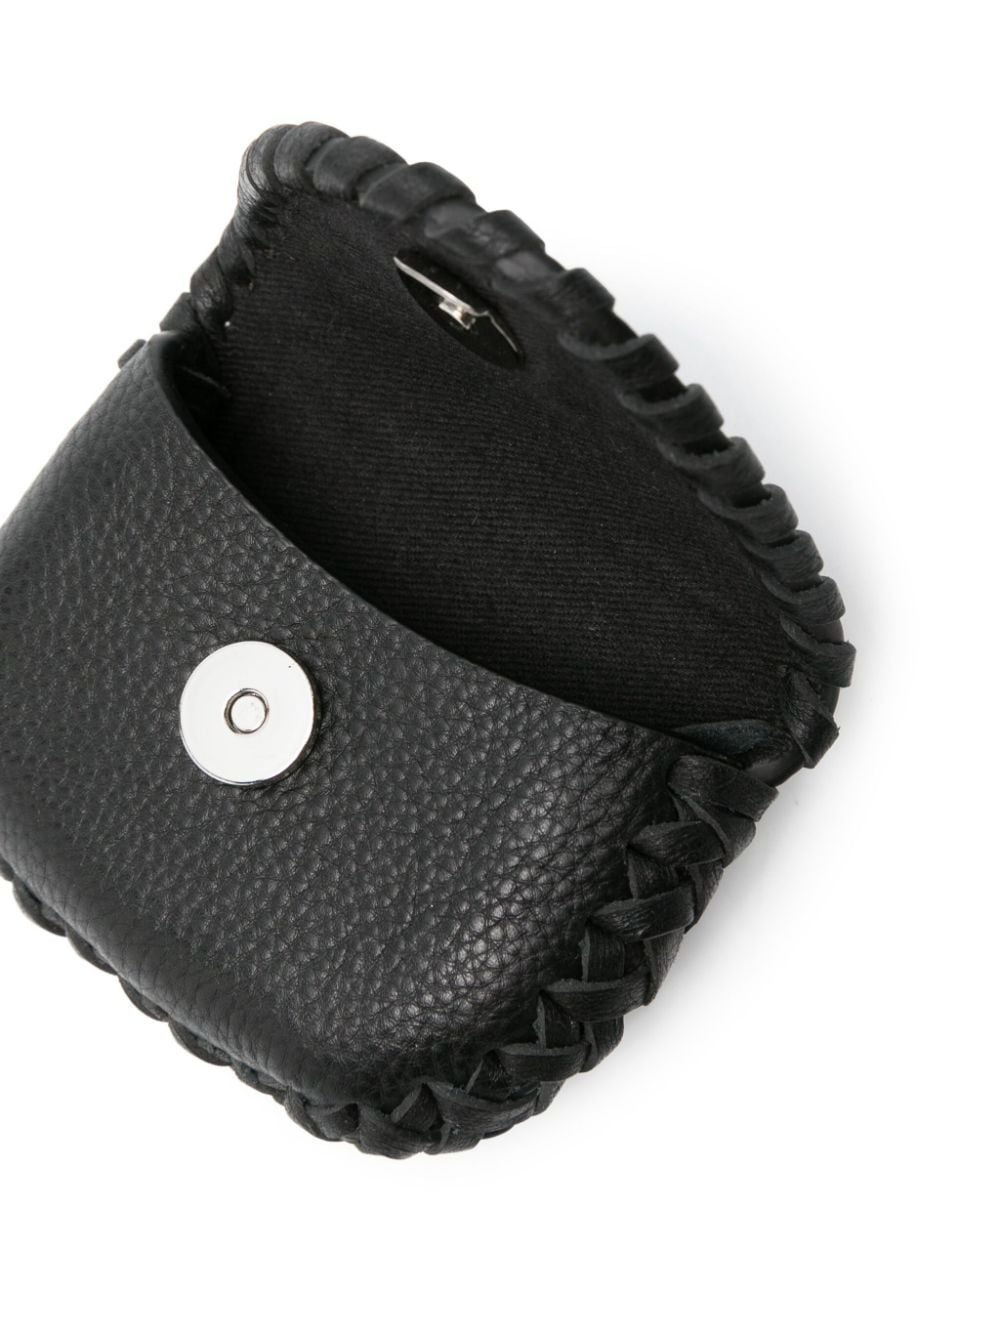 Secret AirPods Pro leather case - 3